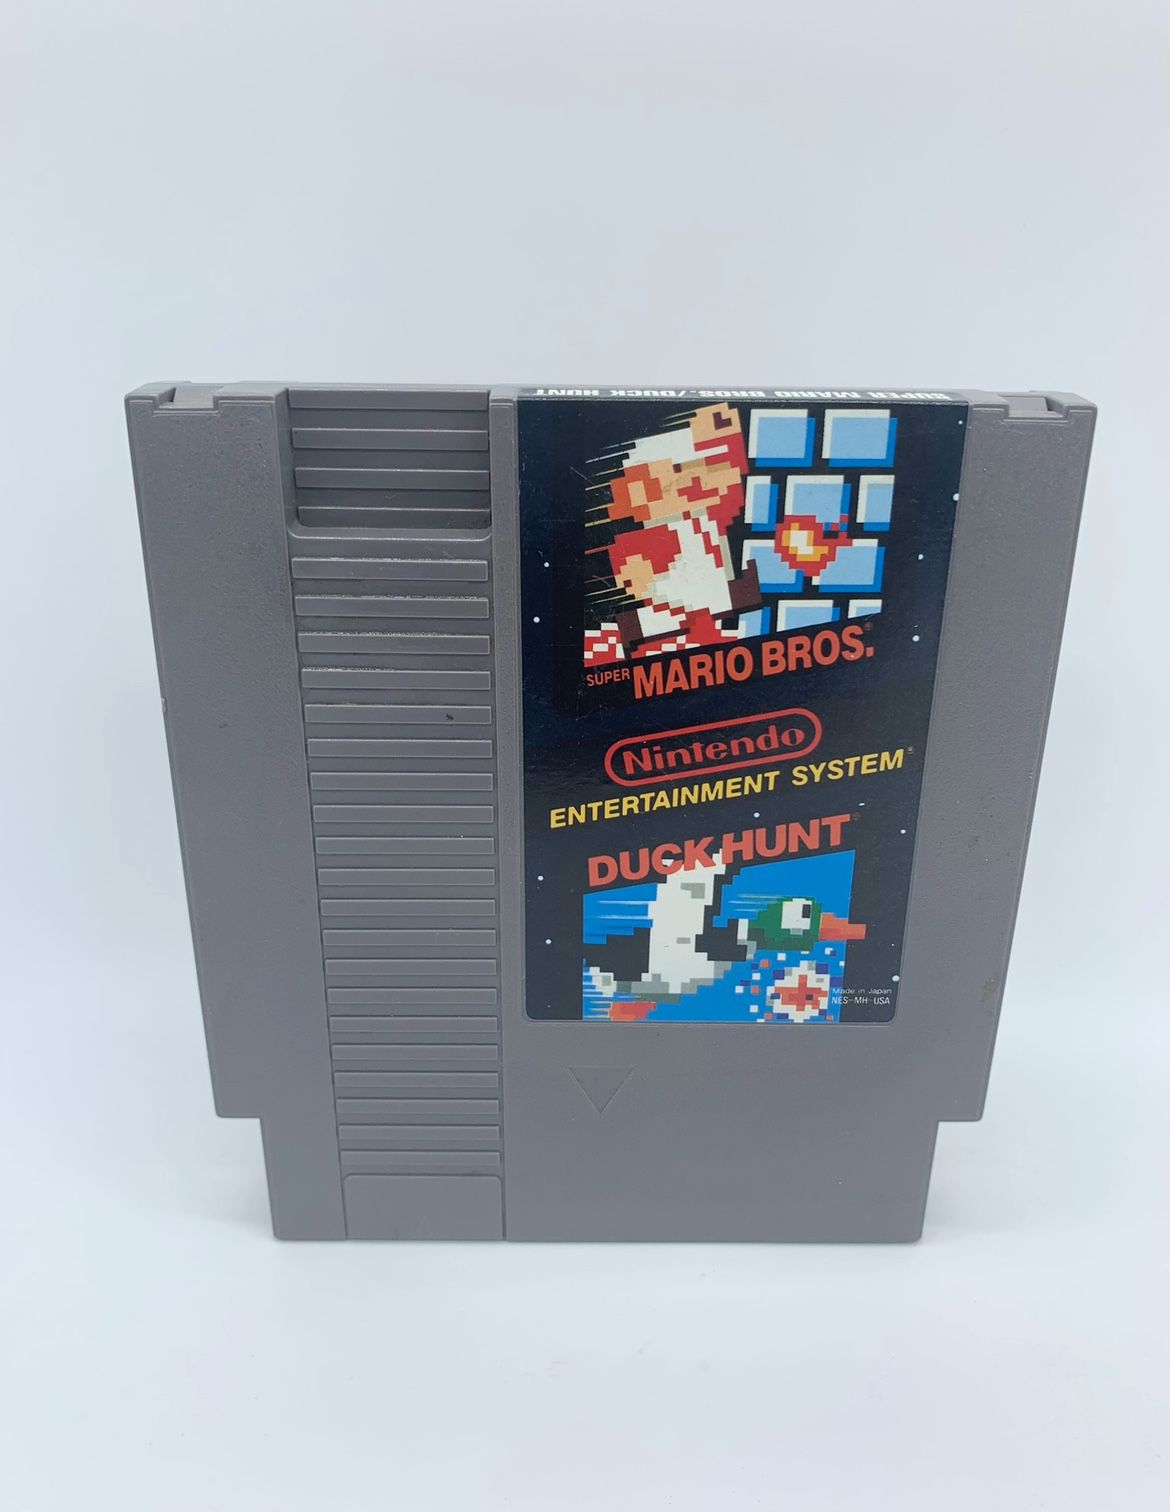 Super Mario Bros. And Duck Hunt